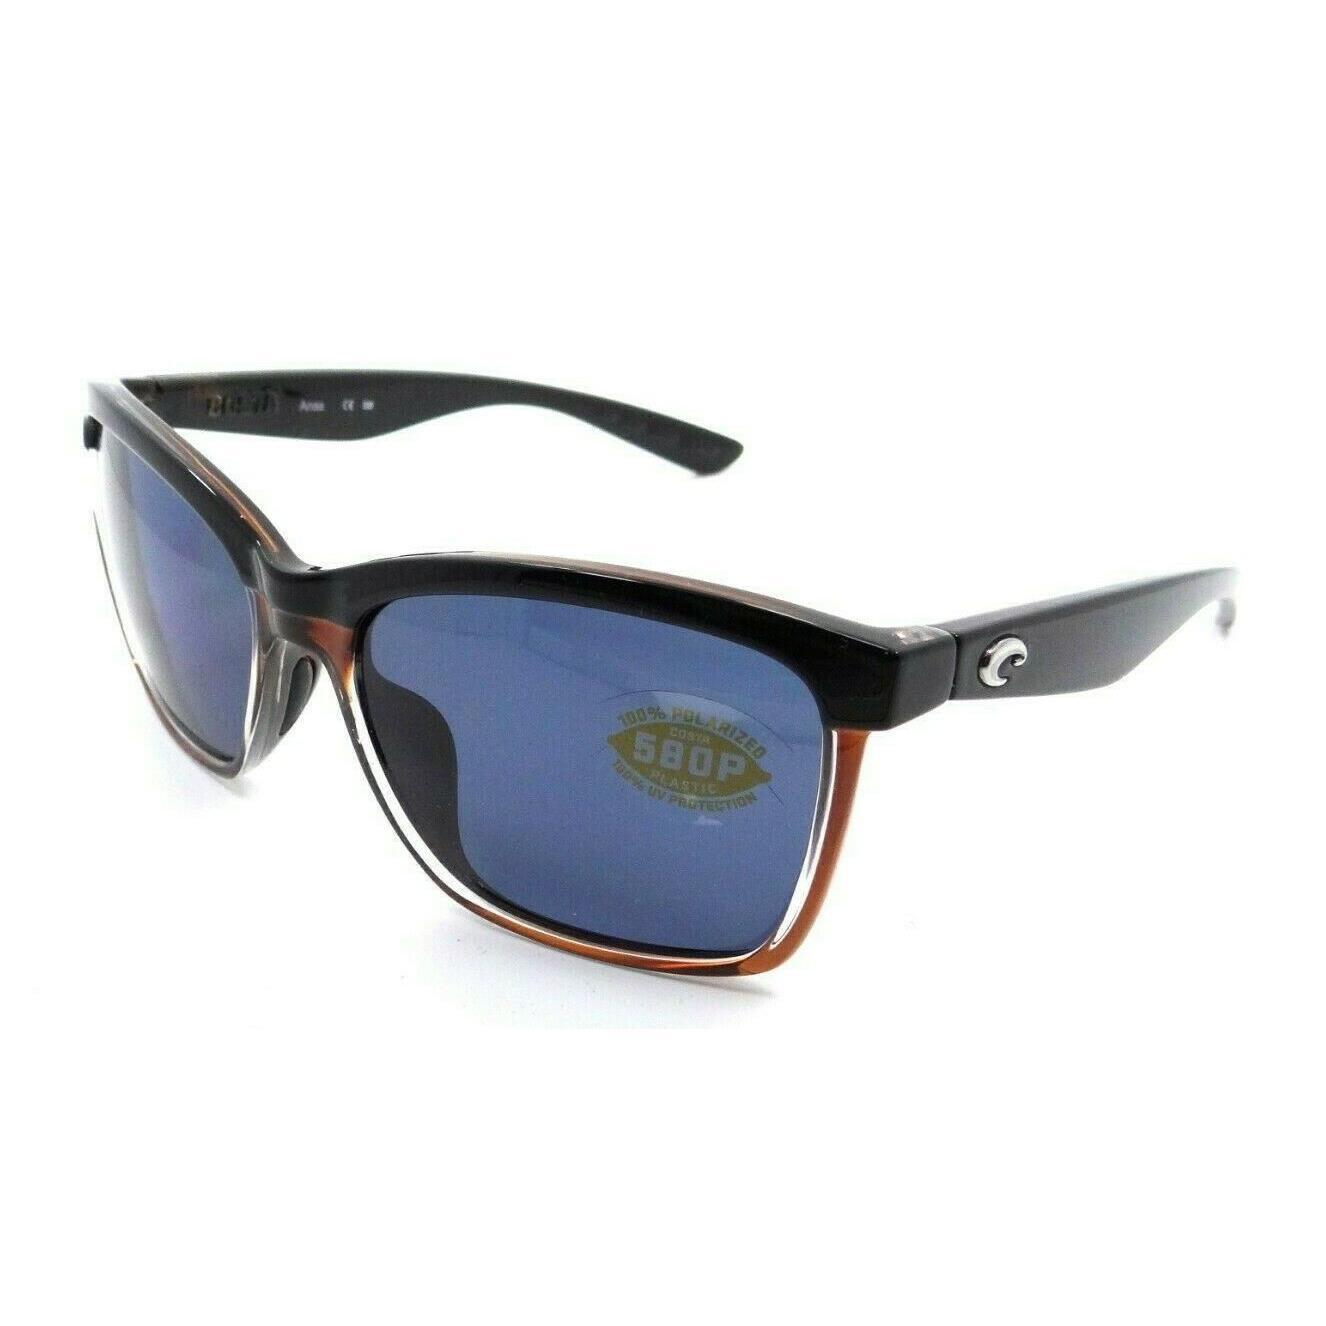 New Authentic Costa Del Mar Anaa 105 Sunglasses Shiny Black on Brown w/Gray Lens 580P